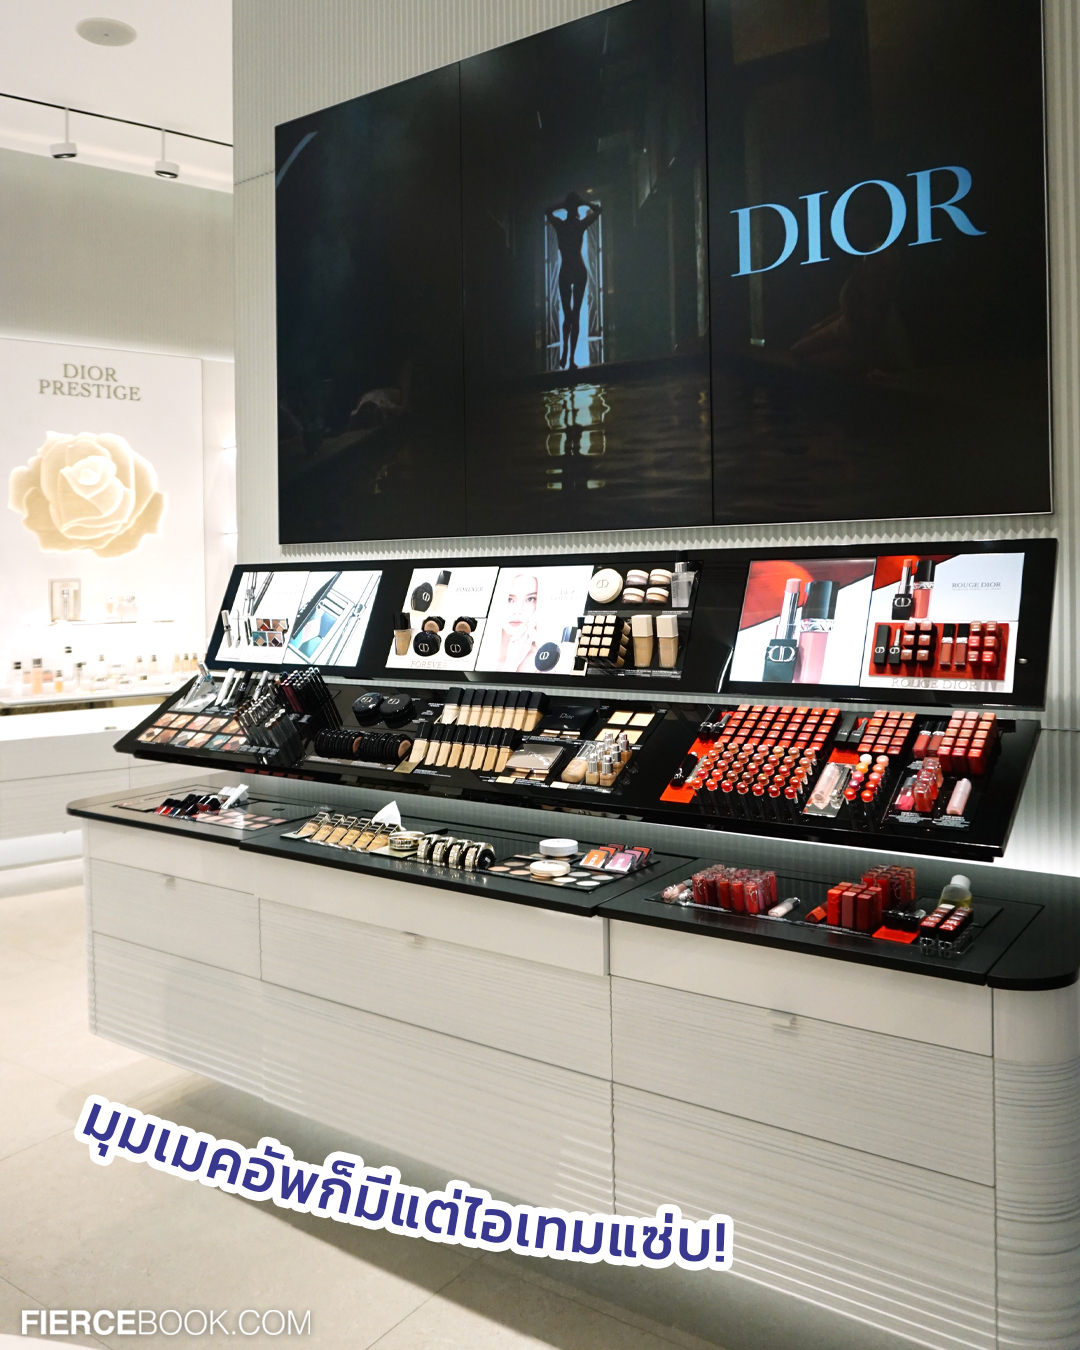 Beauty, Dior Beauty, Dior Beauty Boutique, The EmQuartier, ร้าน, บูทีค, เปิดใหม่, น้ำหอม, La Collection Privée, ผ้า Mitzah, Fashion Jewelry, สกินแคร์, เครื่องสำอาง, ดิออร์, ต่างหู, กำไล, สร้อย, สร้อยข้อมือ